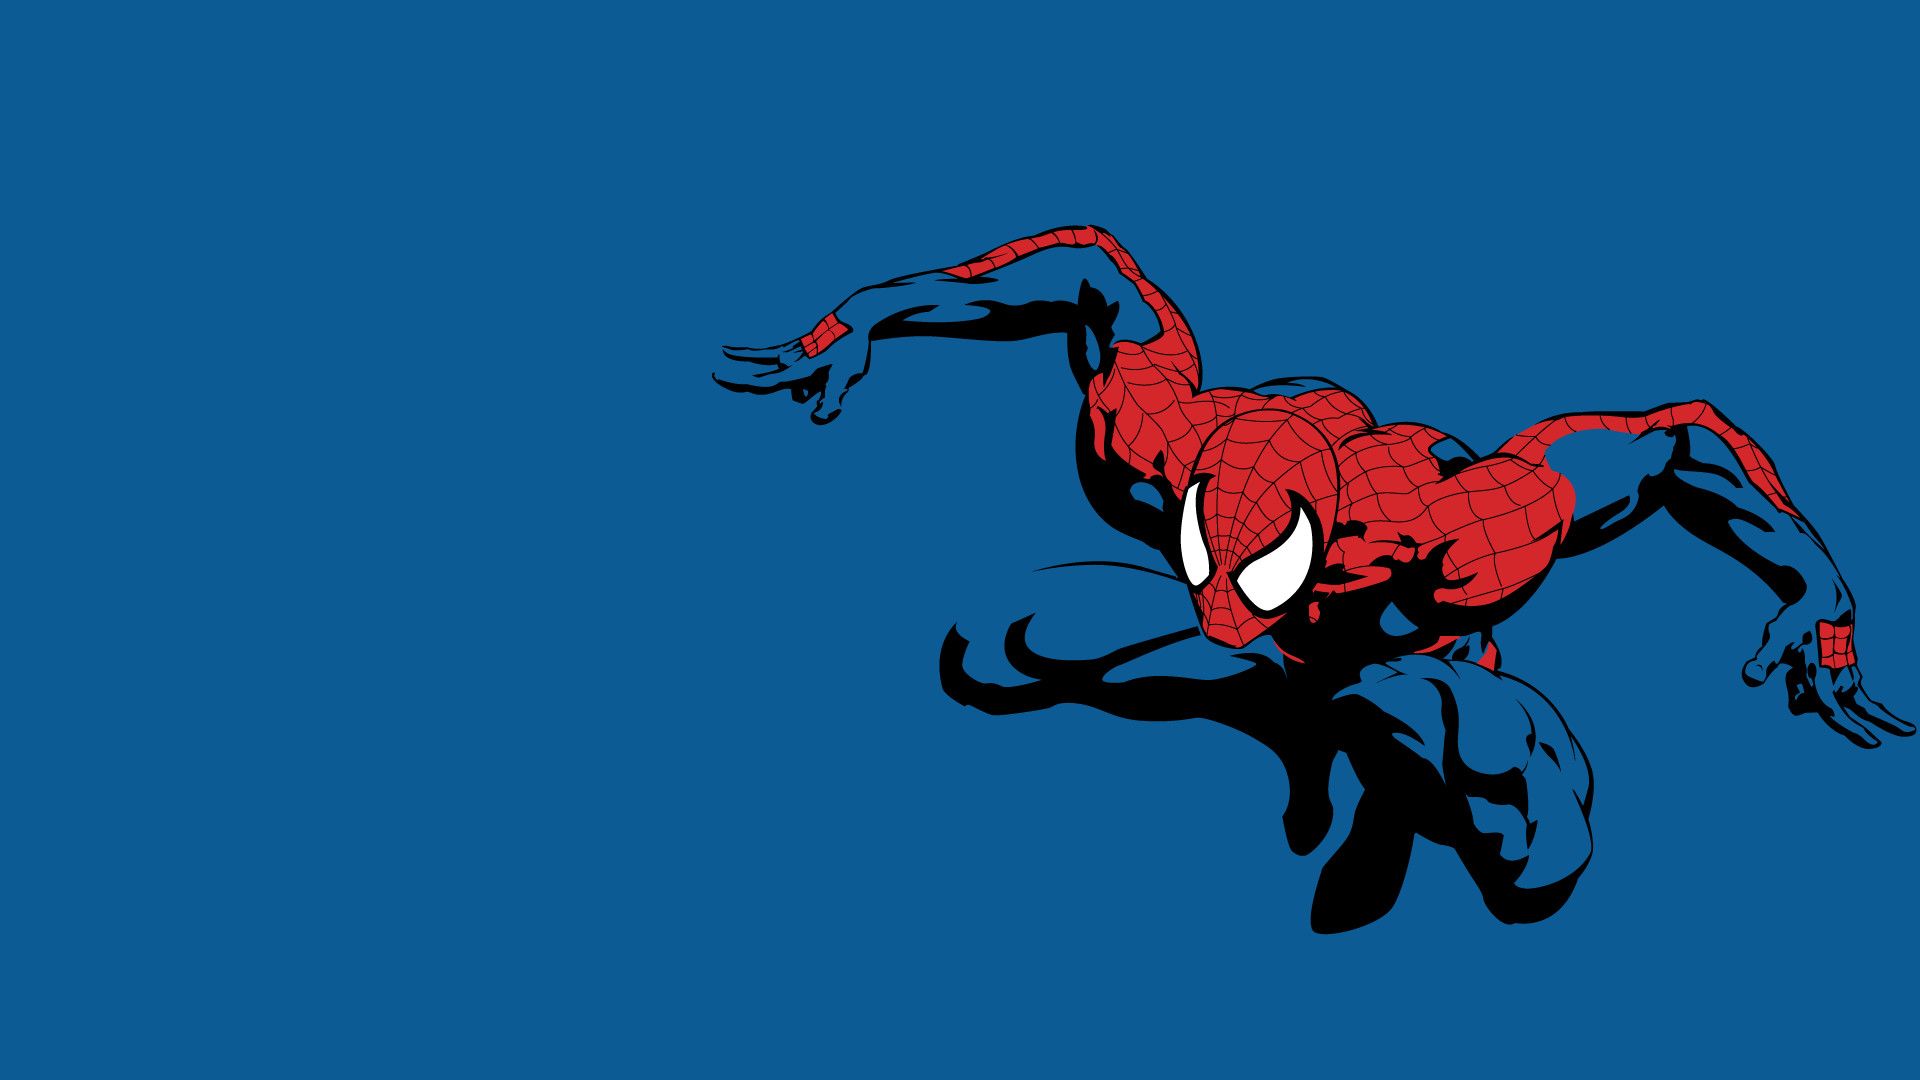 Symbiote Spiderman Wallpaper image